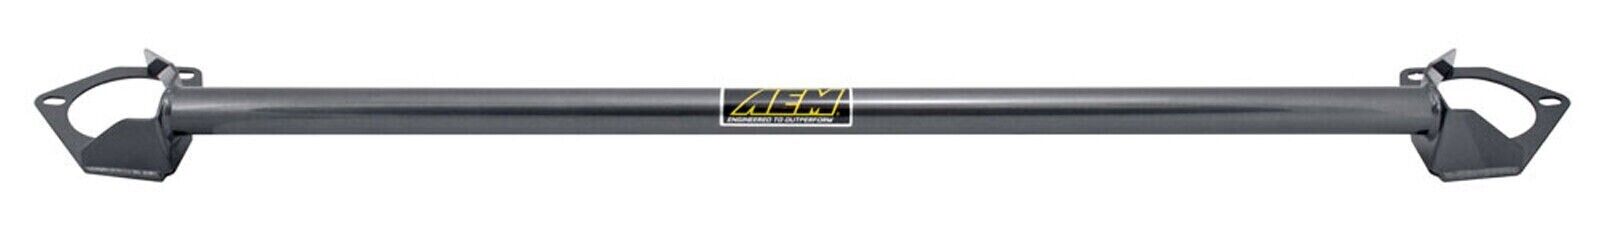 AEM 29-0010 Strut Bar w/ Hardware For 08-15 Mitsubishi Lancer 2.0L / 2.4L